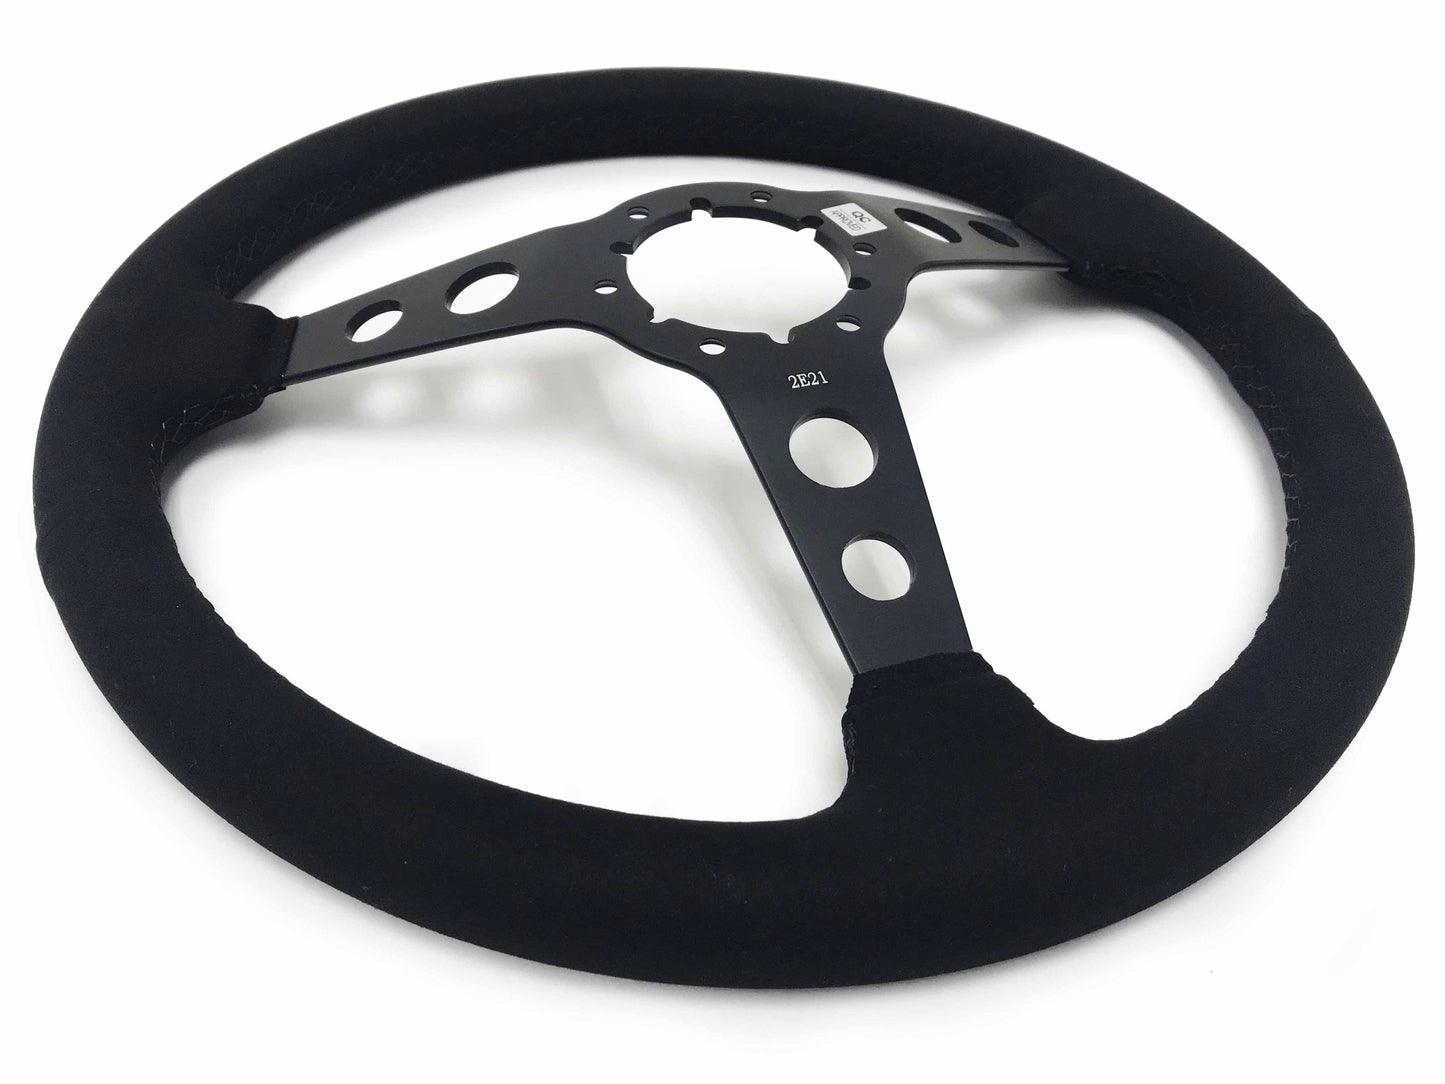 Mazda MX-6 Steering Wheel Kit | Black Ultralux Suede | ST3583BLK